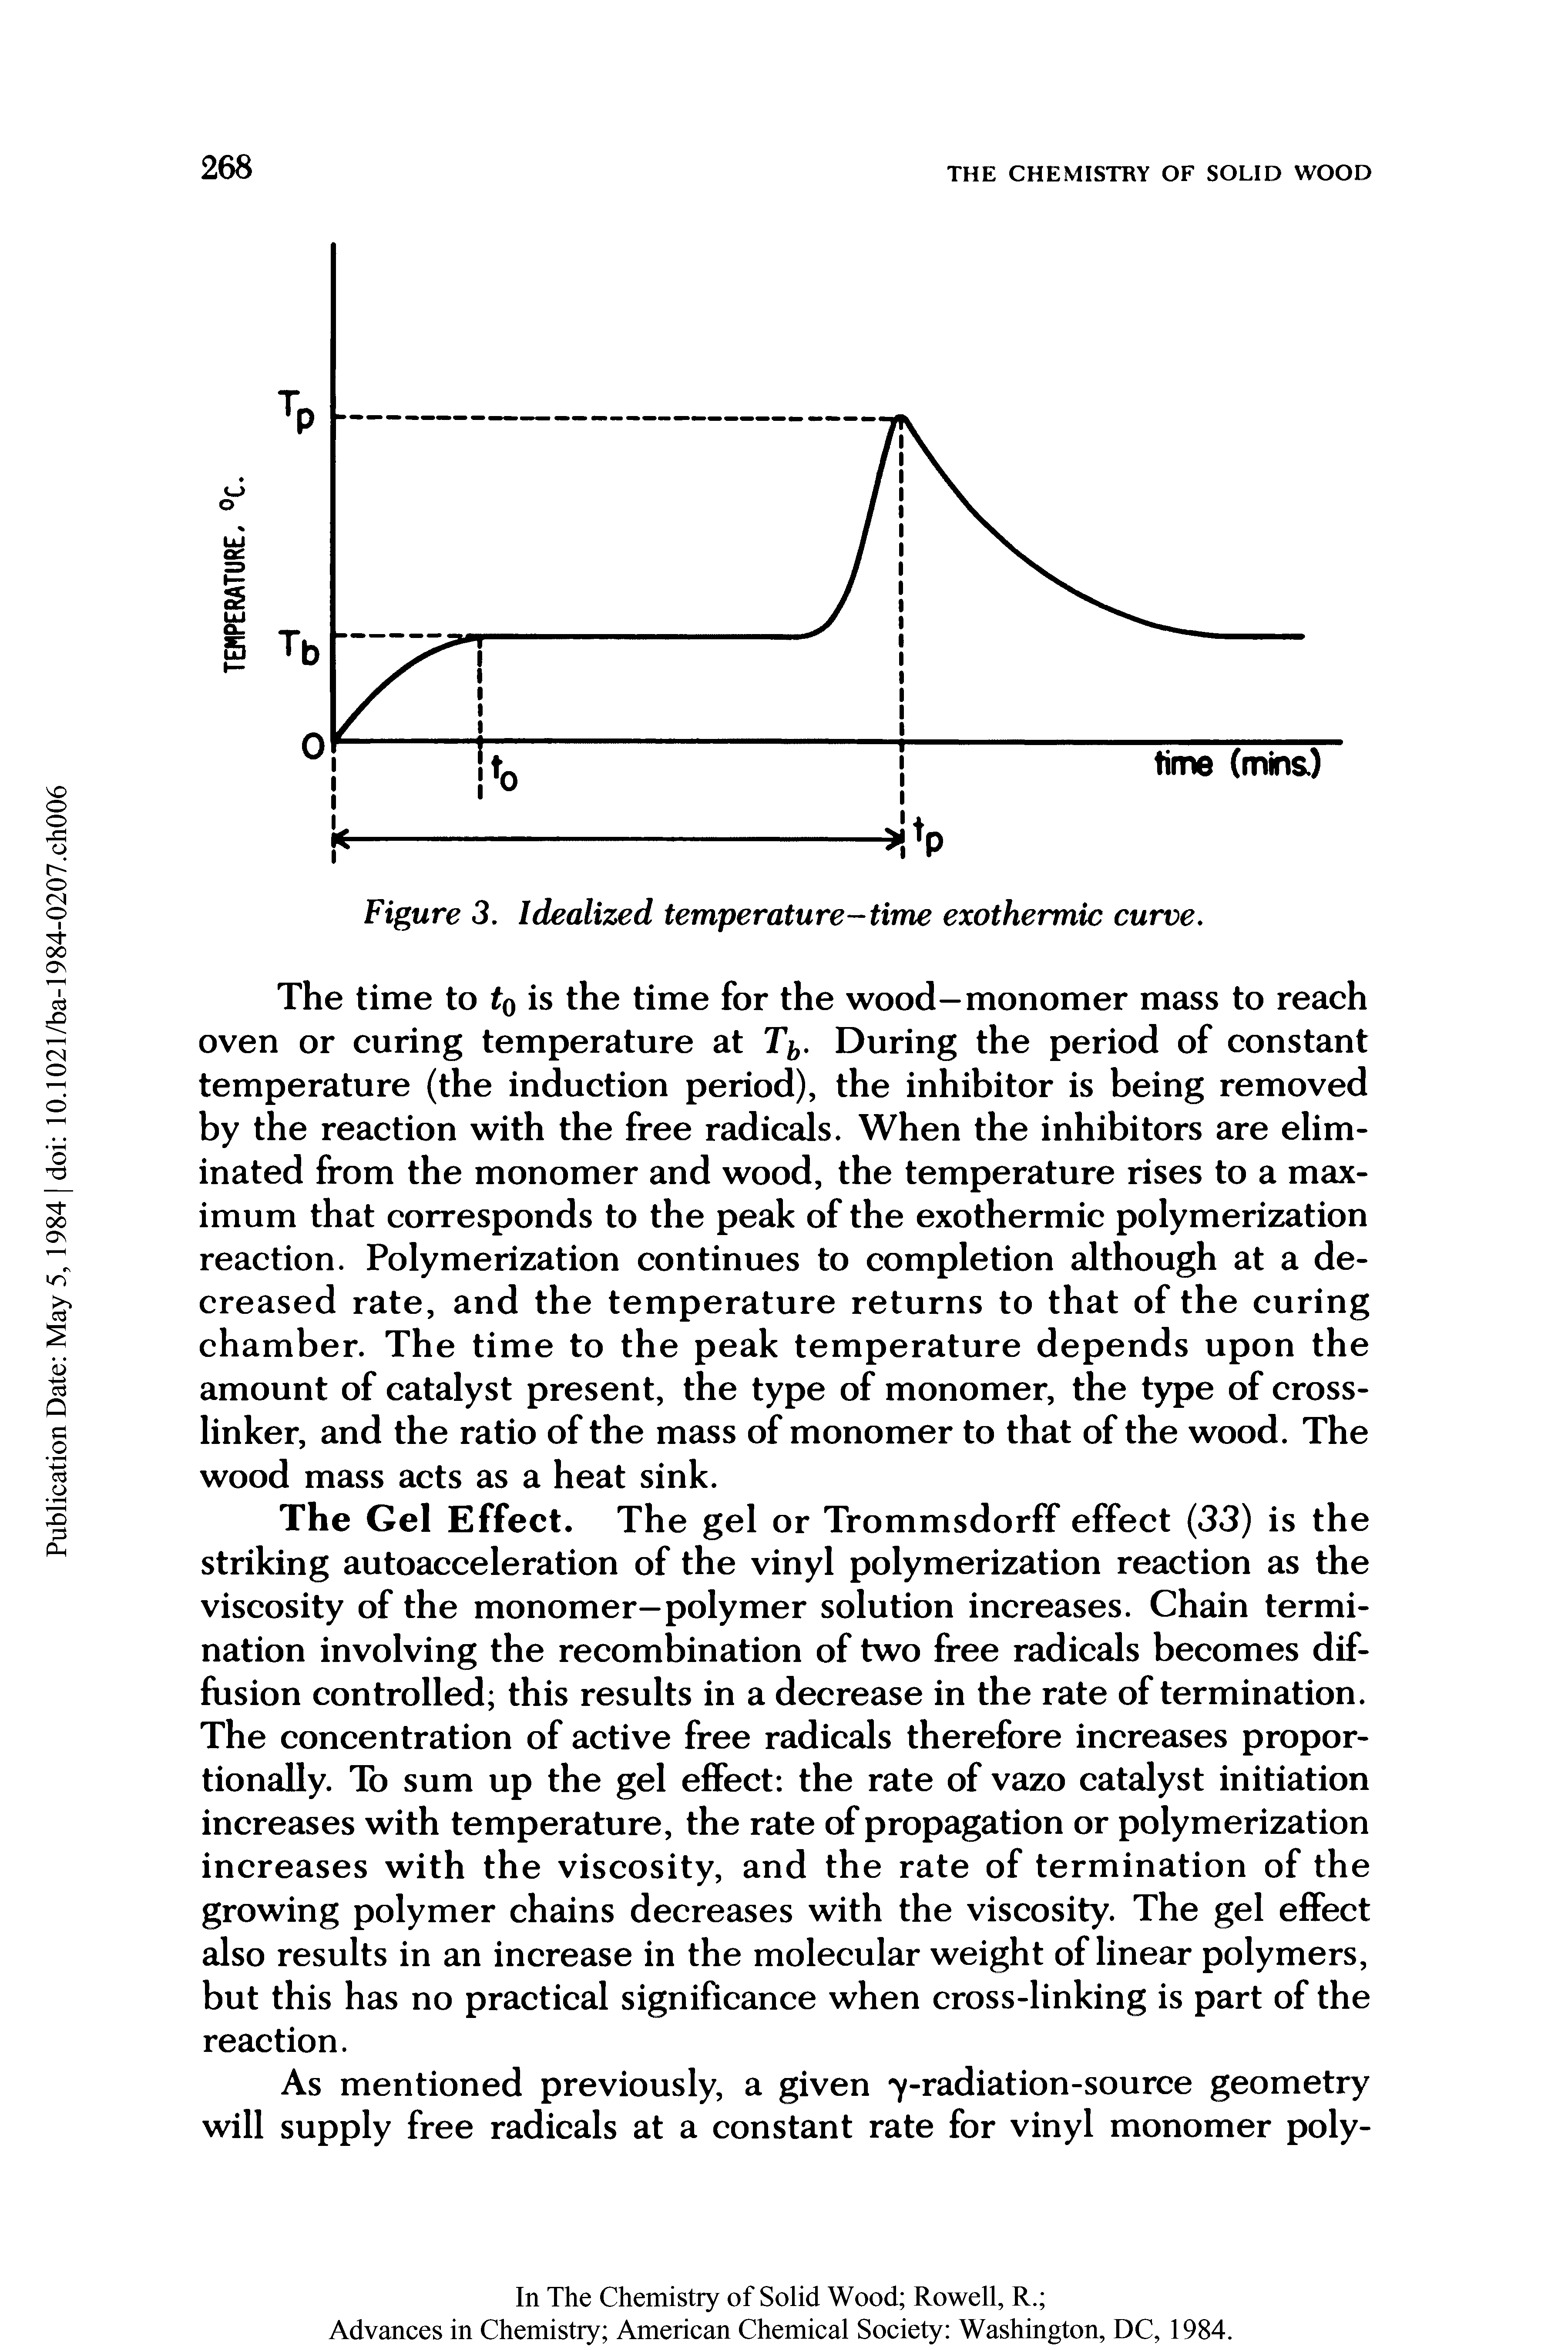 Figure 3. Idealized temperature-time exothermic curve.